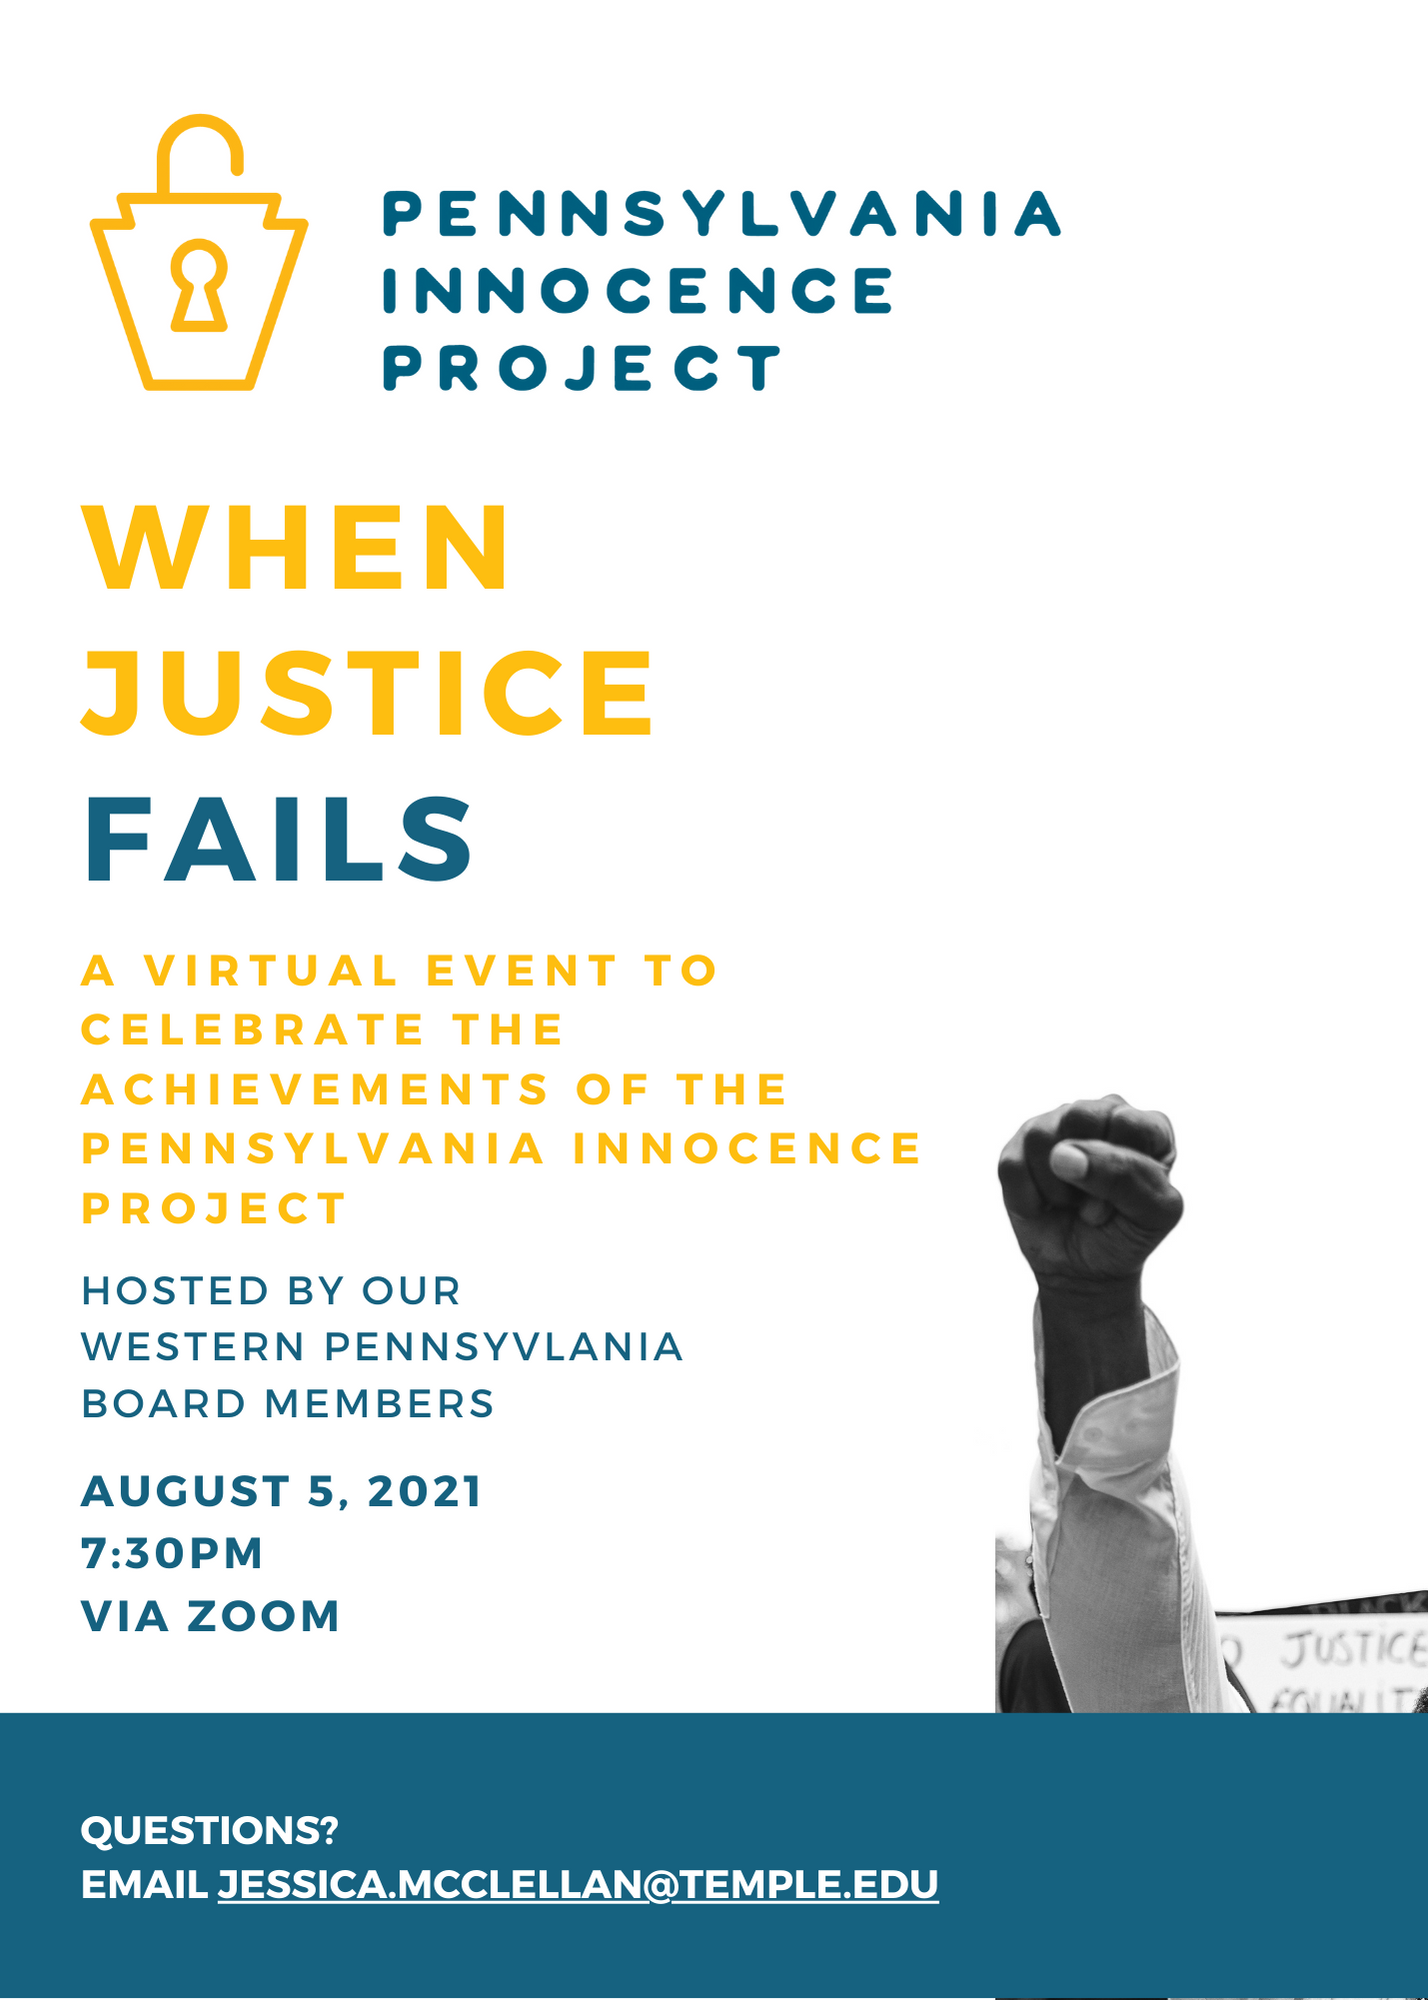 Western Pennsylvania Virtual Event